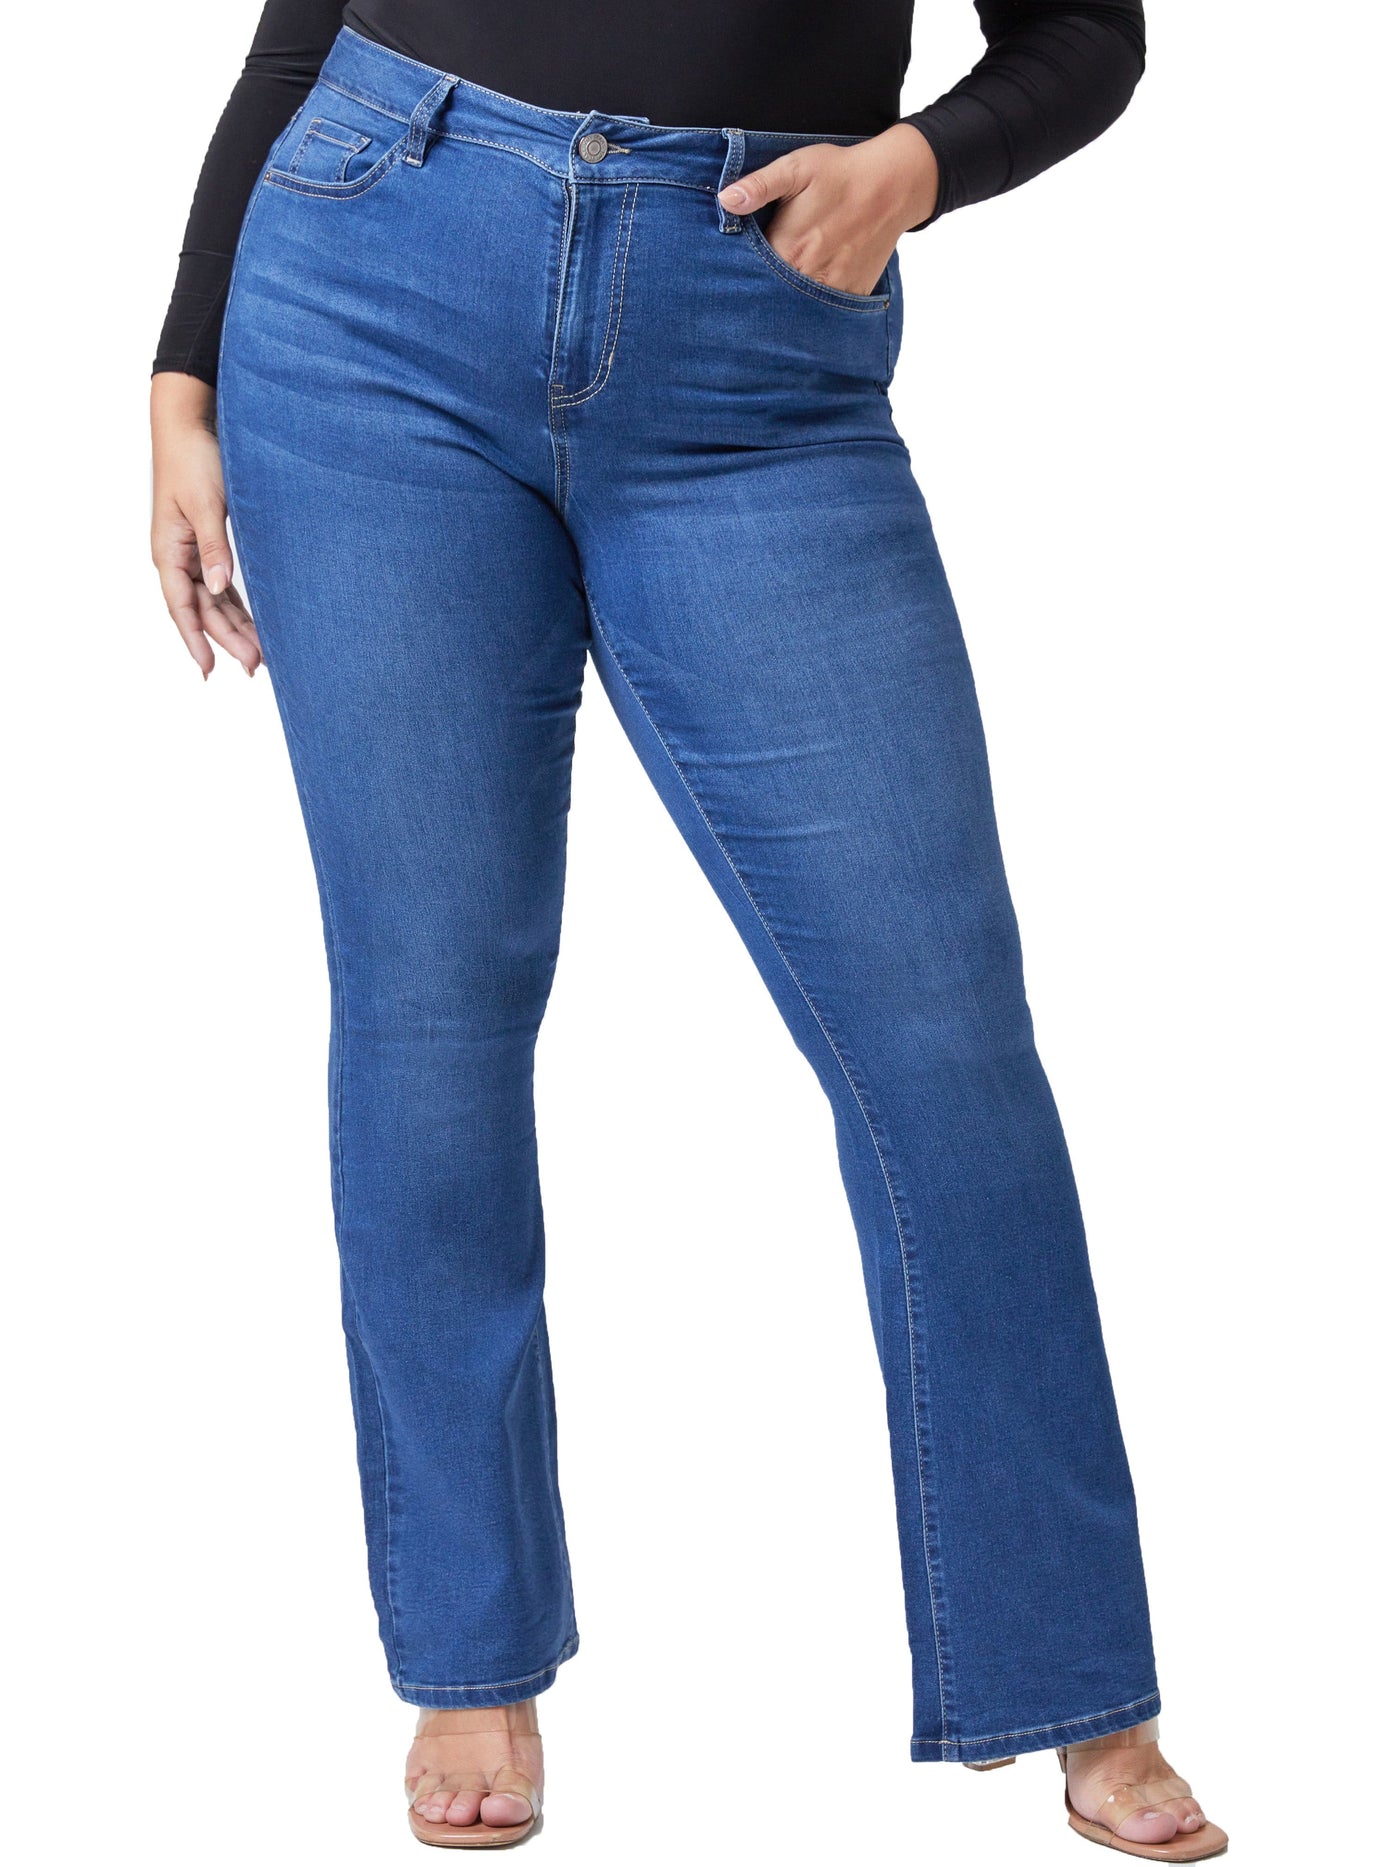 Plus Size Women's Essential HyperDenim Flare Jeans